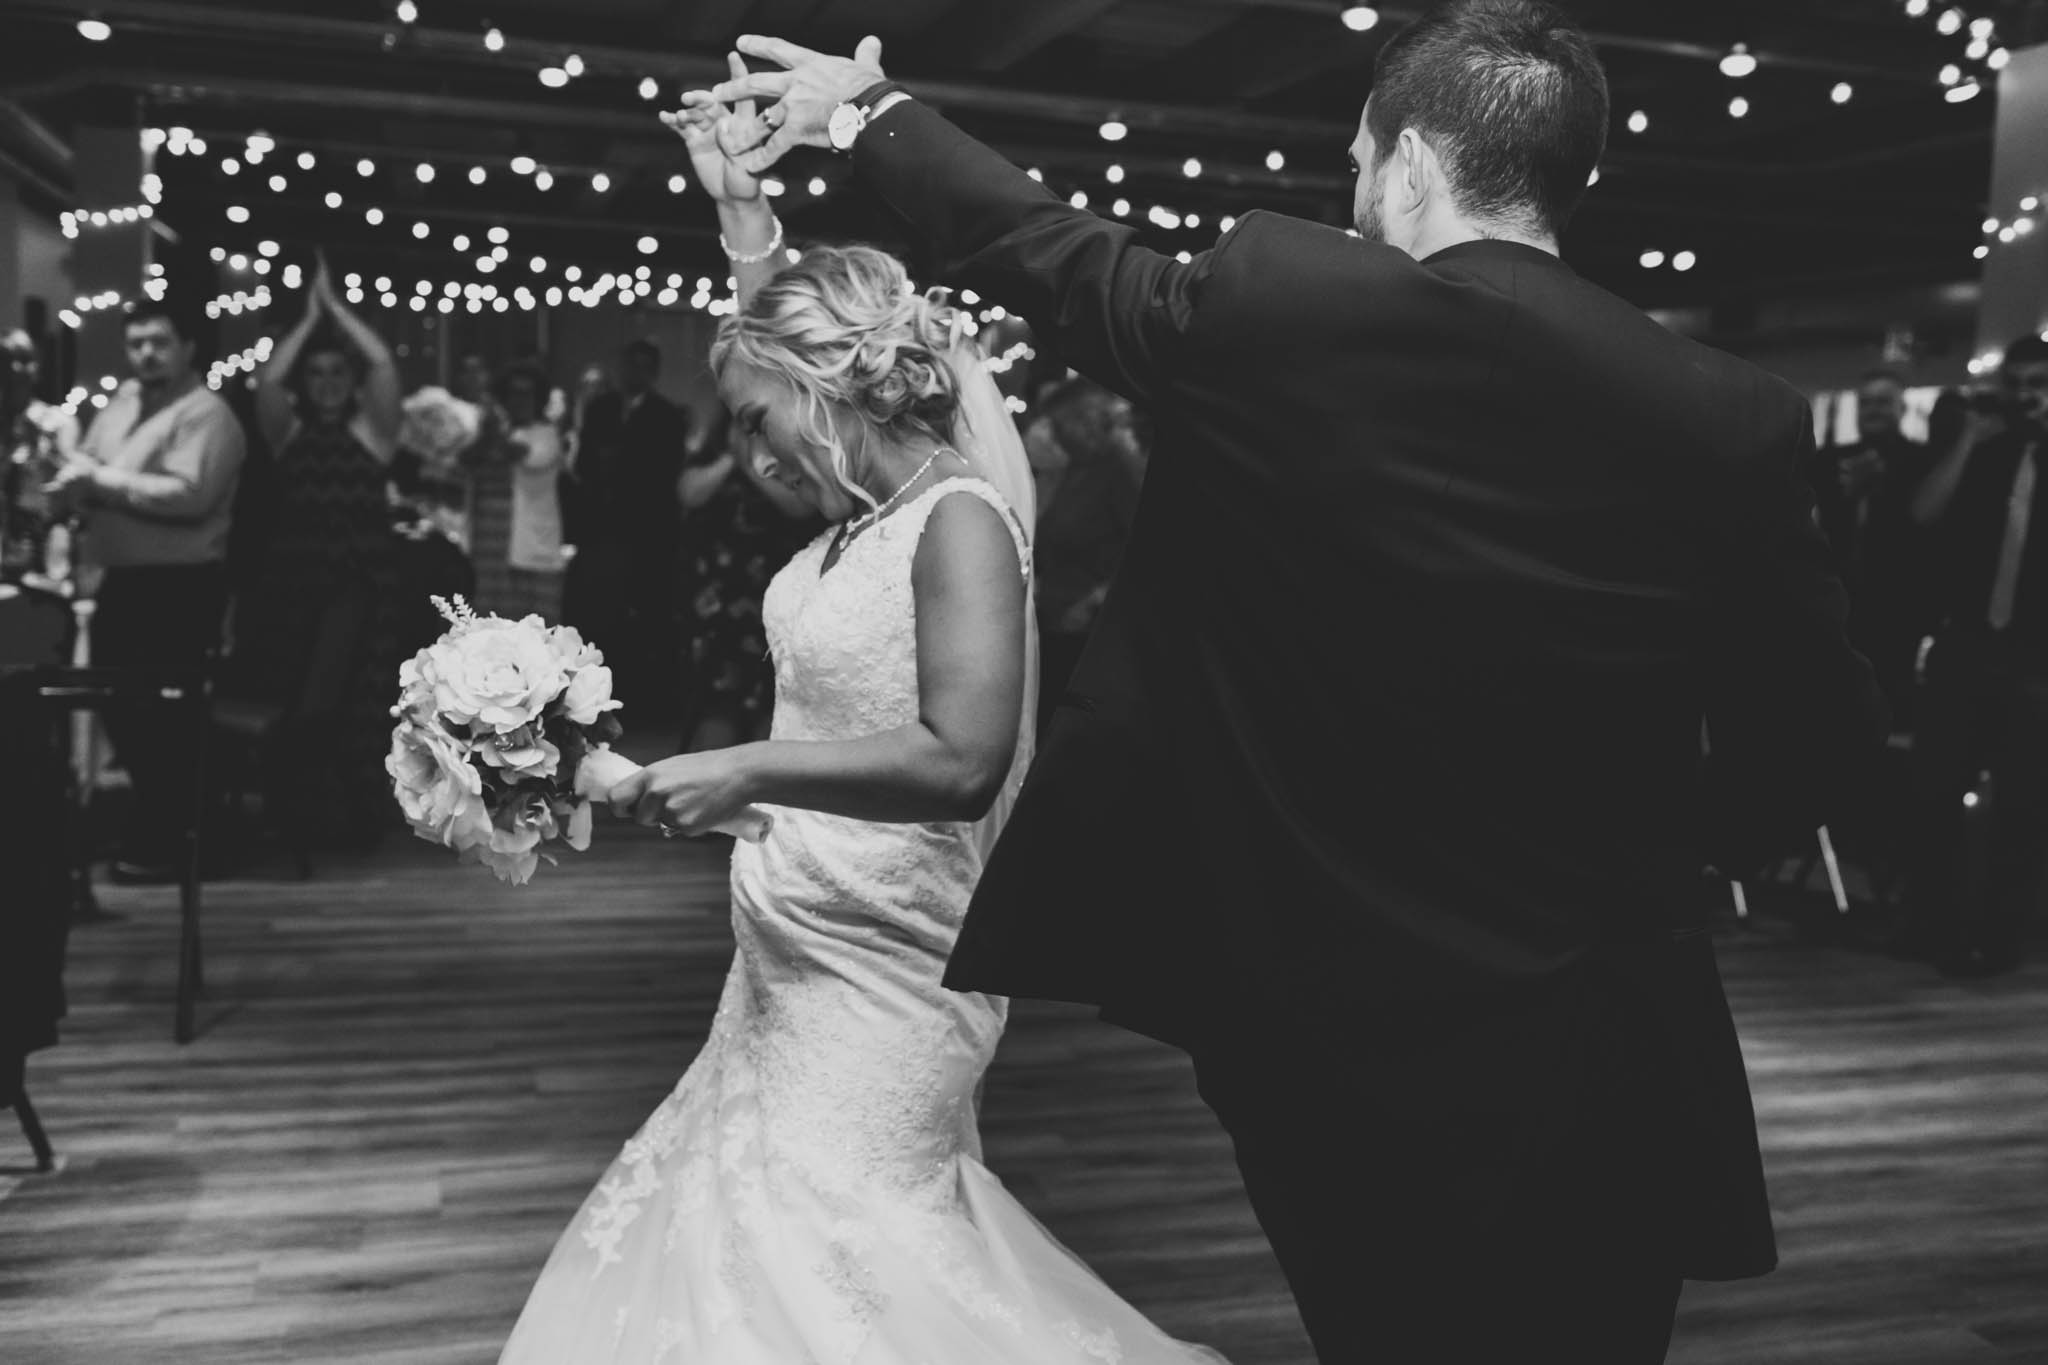 Jillian VanZytveld Photography - Grand Rapids Lifestyle Wedding Photography - 156.jpg